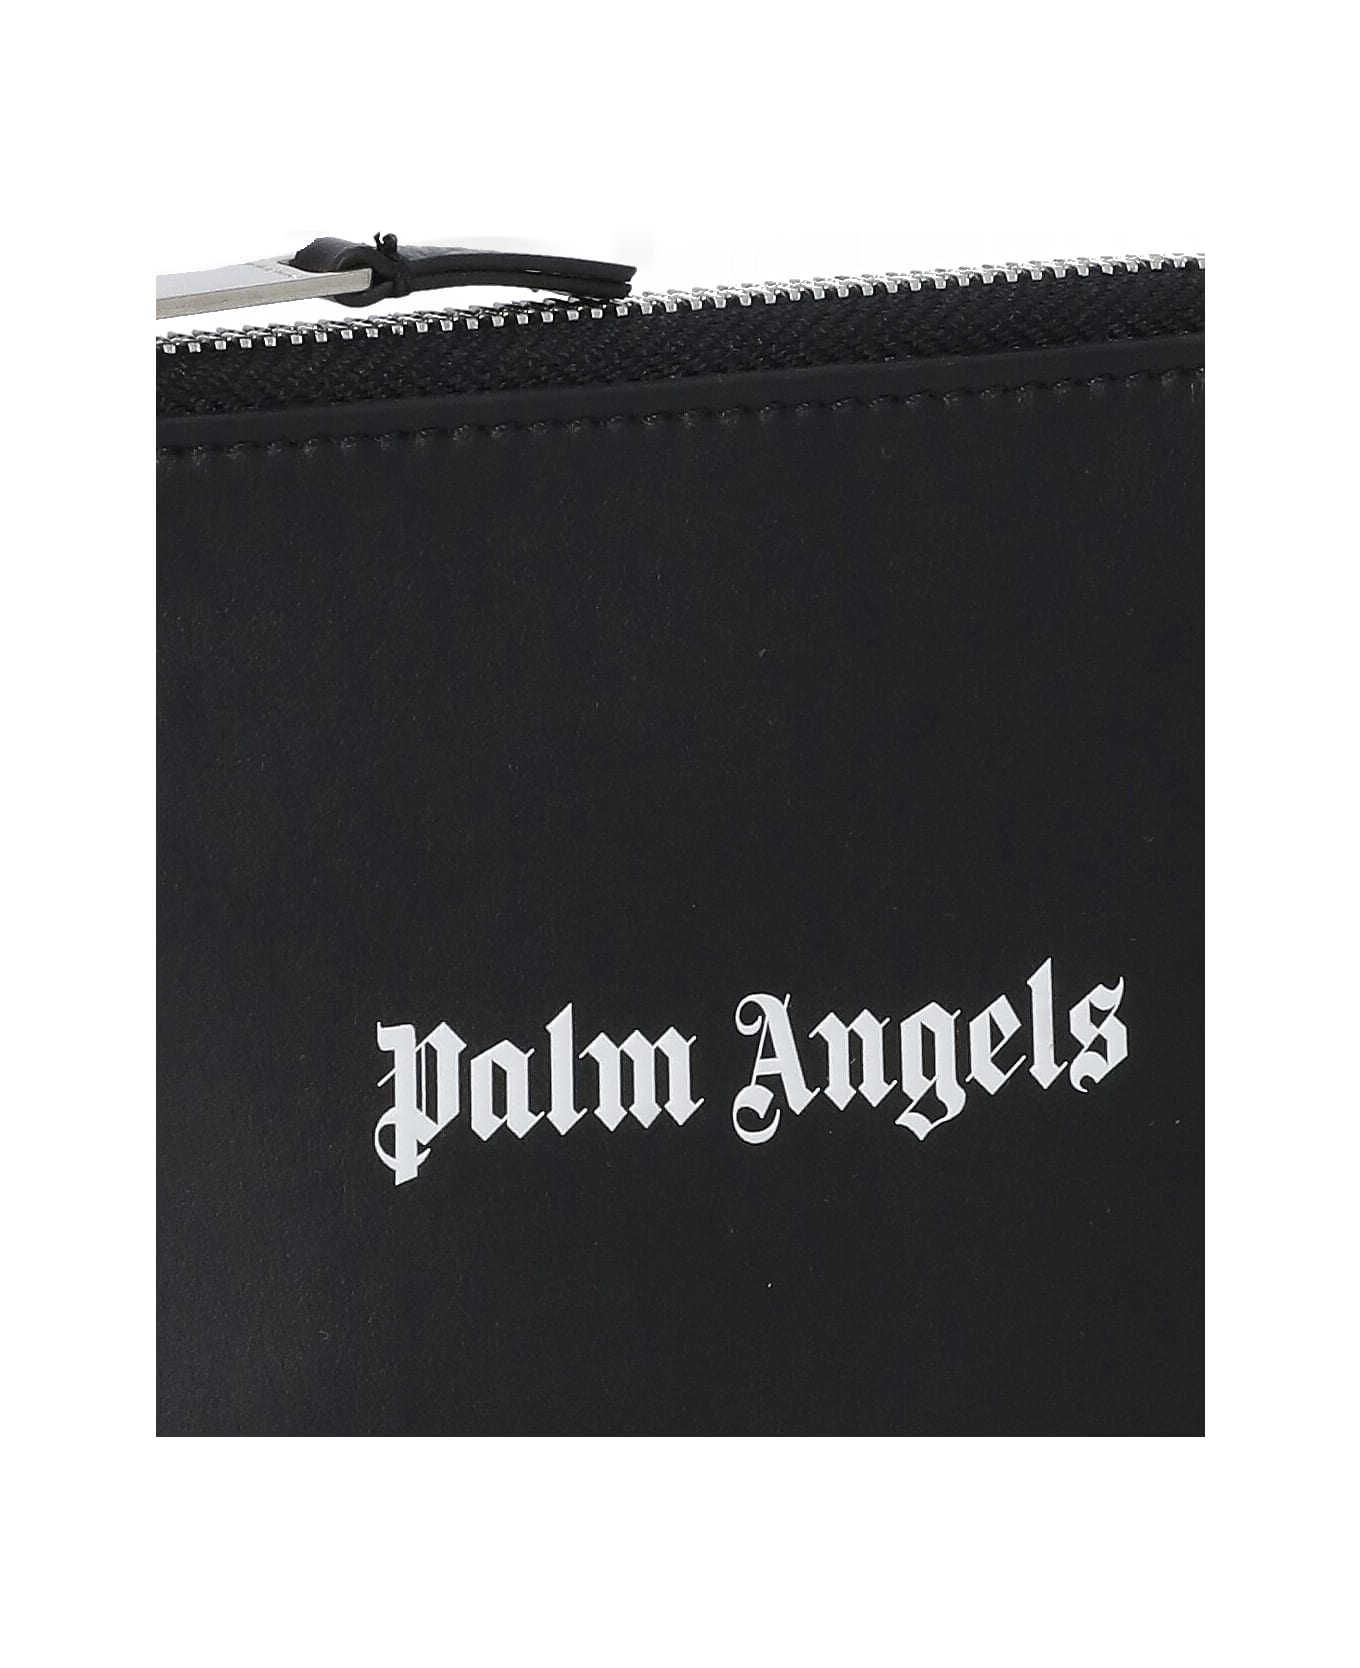 Palm Angels Logoed Card Holder - Black 財布